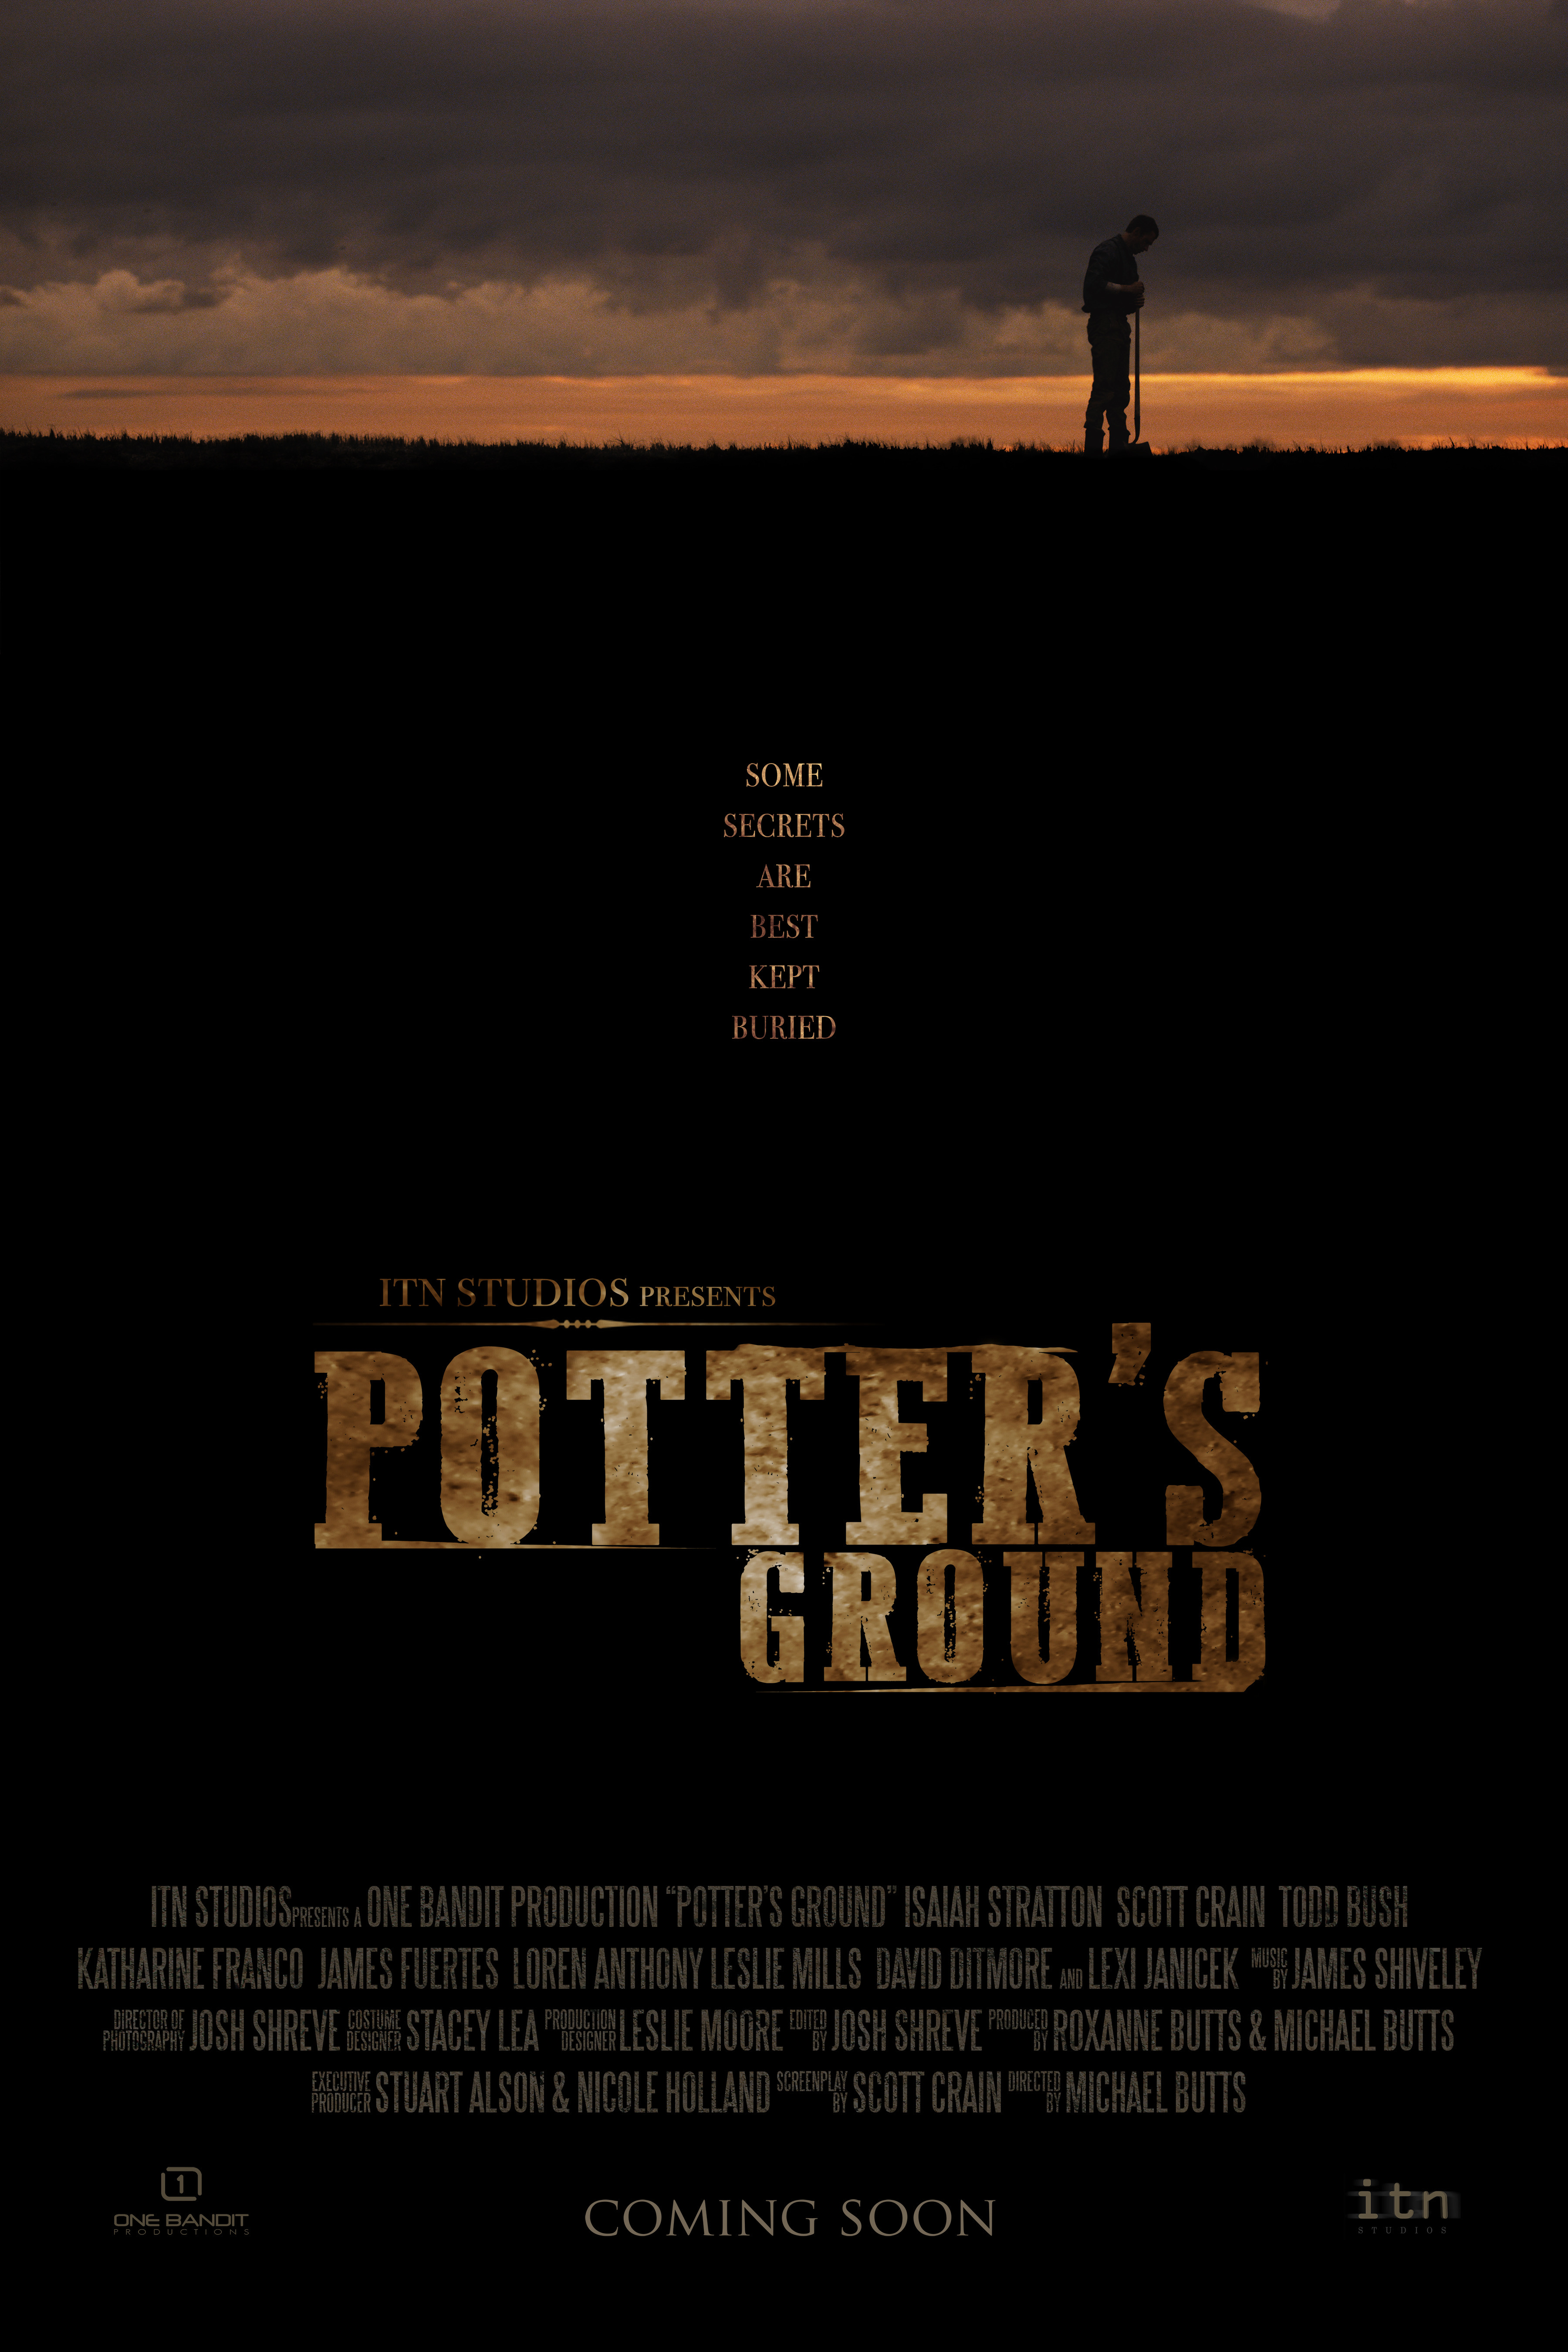 Nonton film Potters Ground layarkaca21 indoxx1 ganool online streaming terbaru